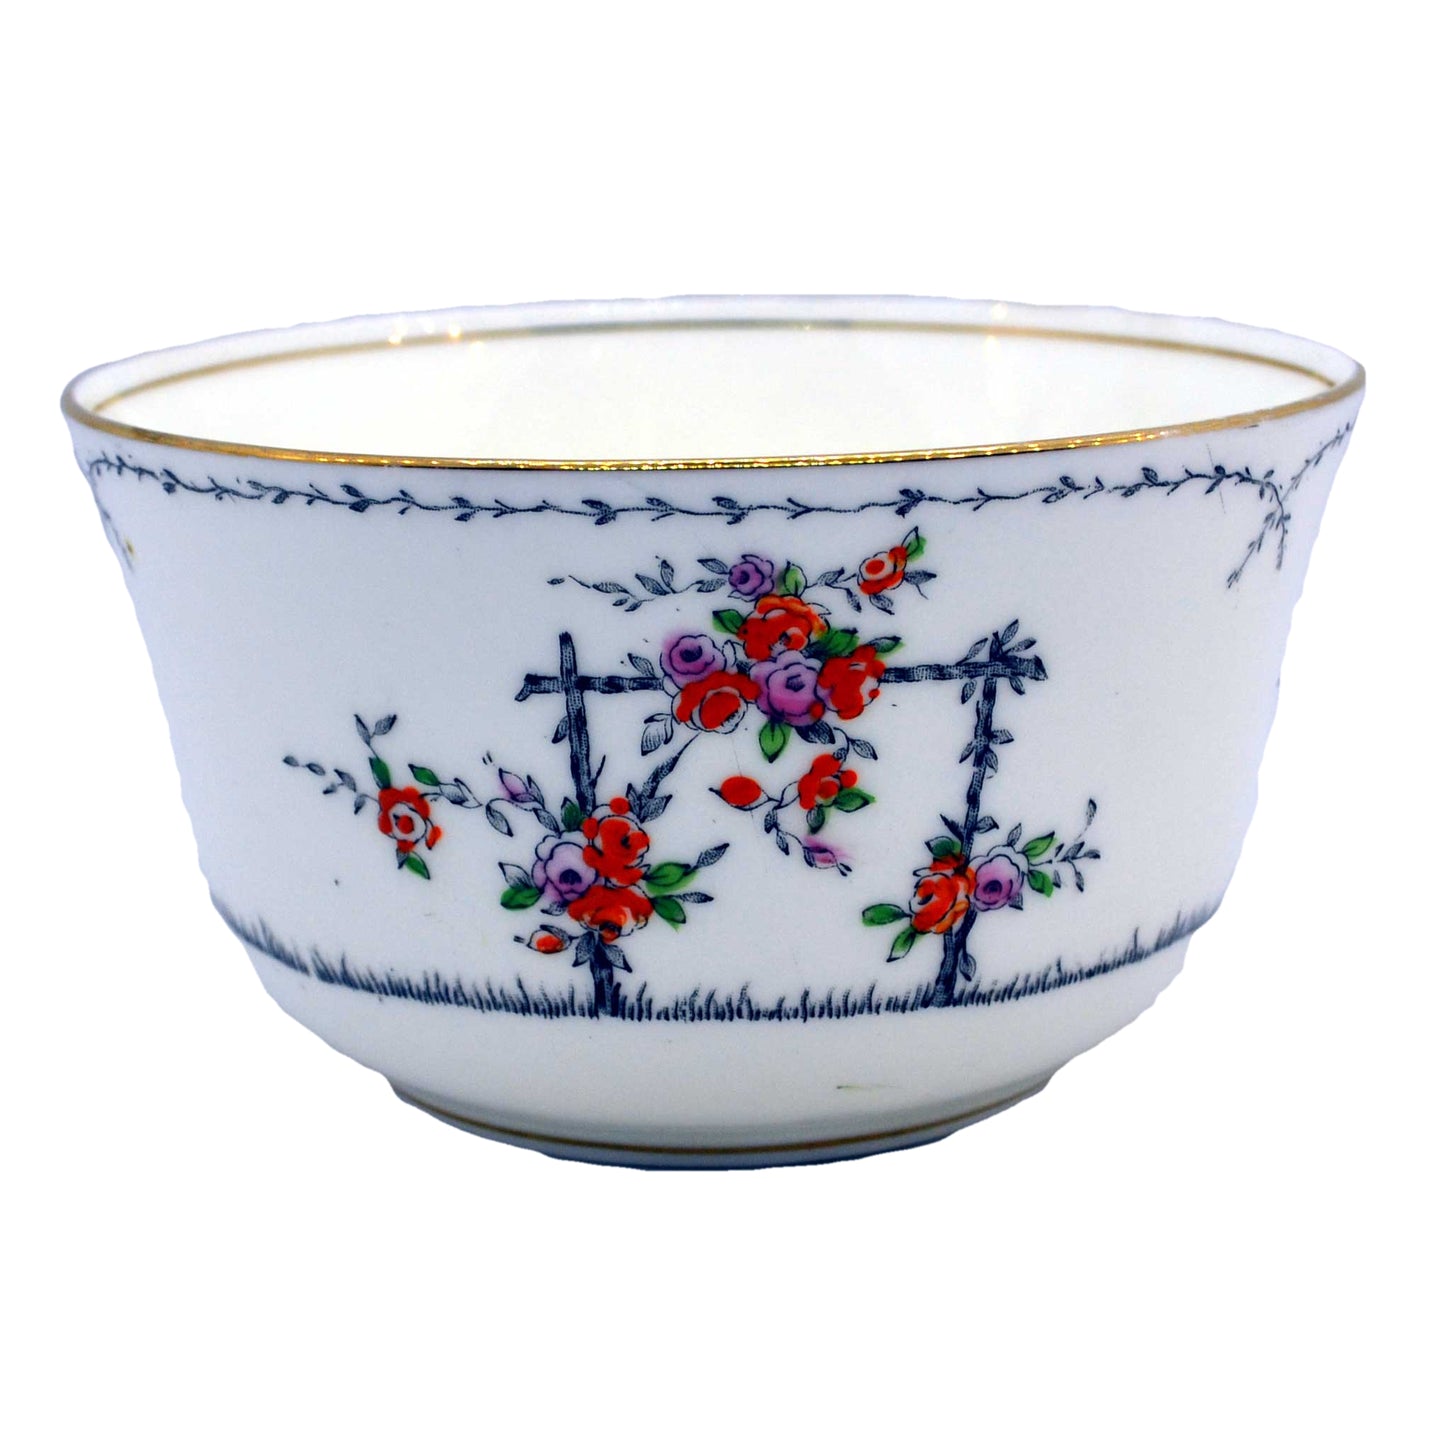 Vintage Gladstone china sugar bowl